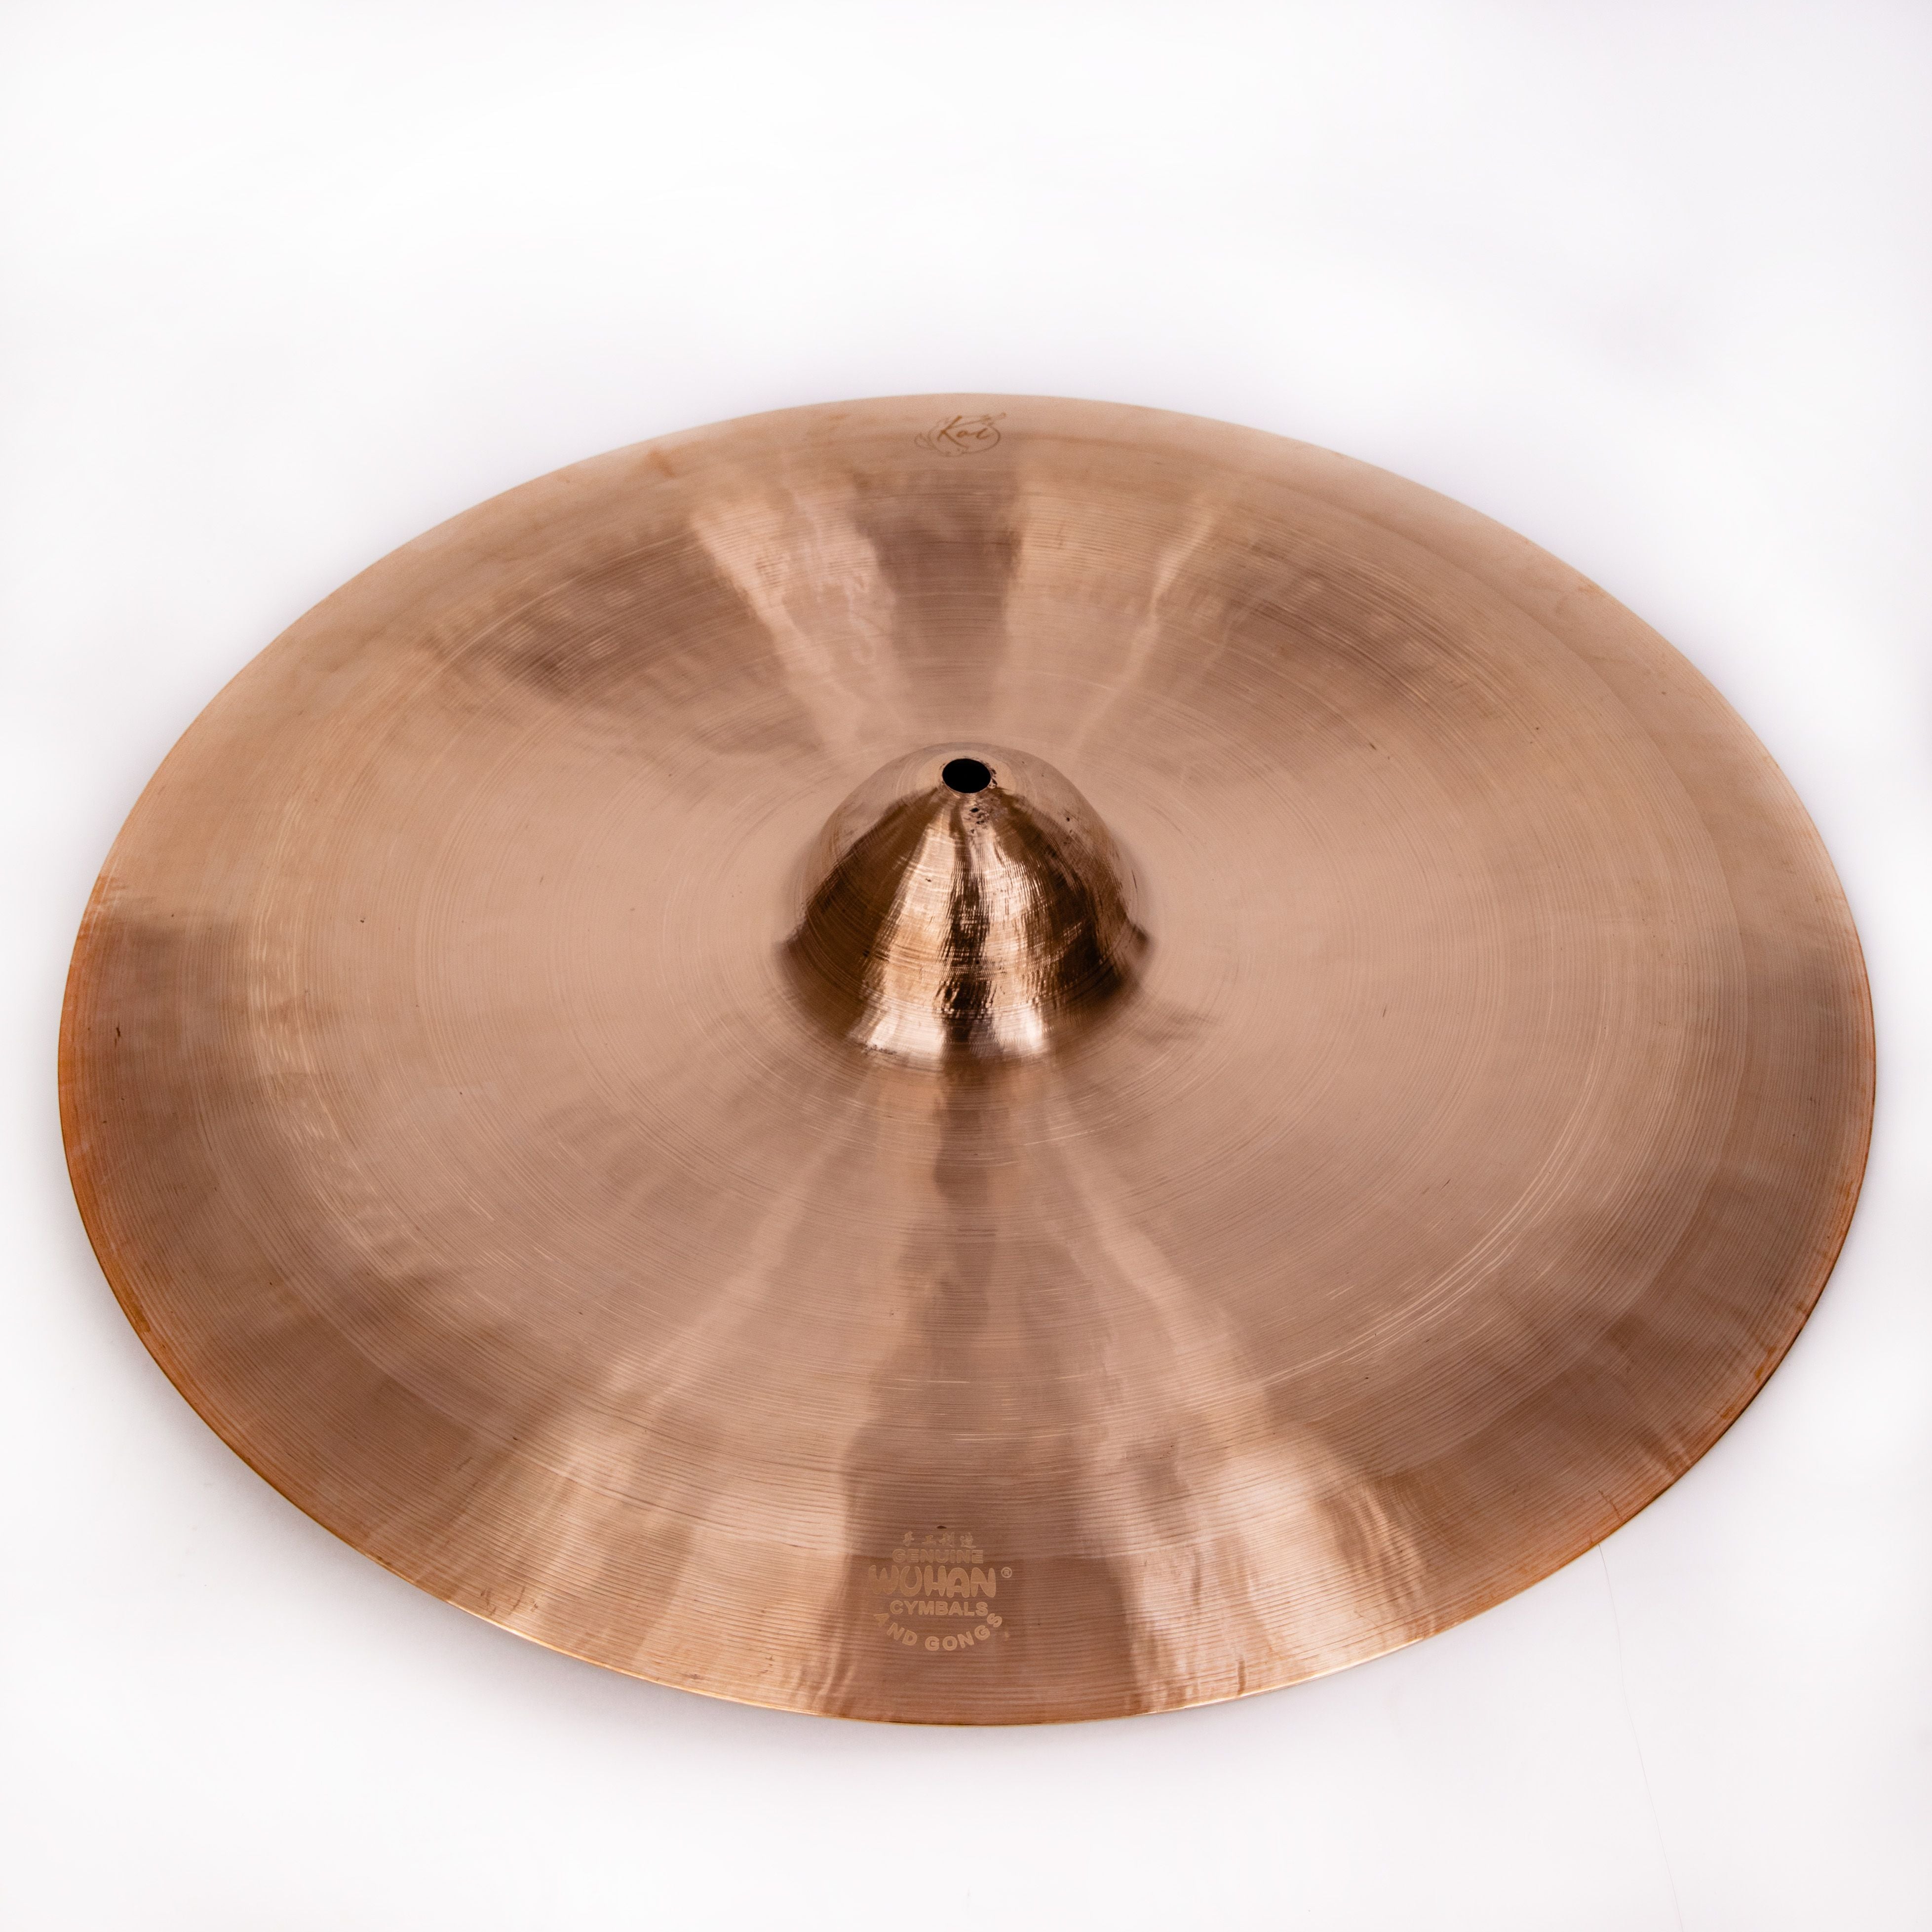 Wuhan 20" Conical China Cymbal